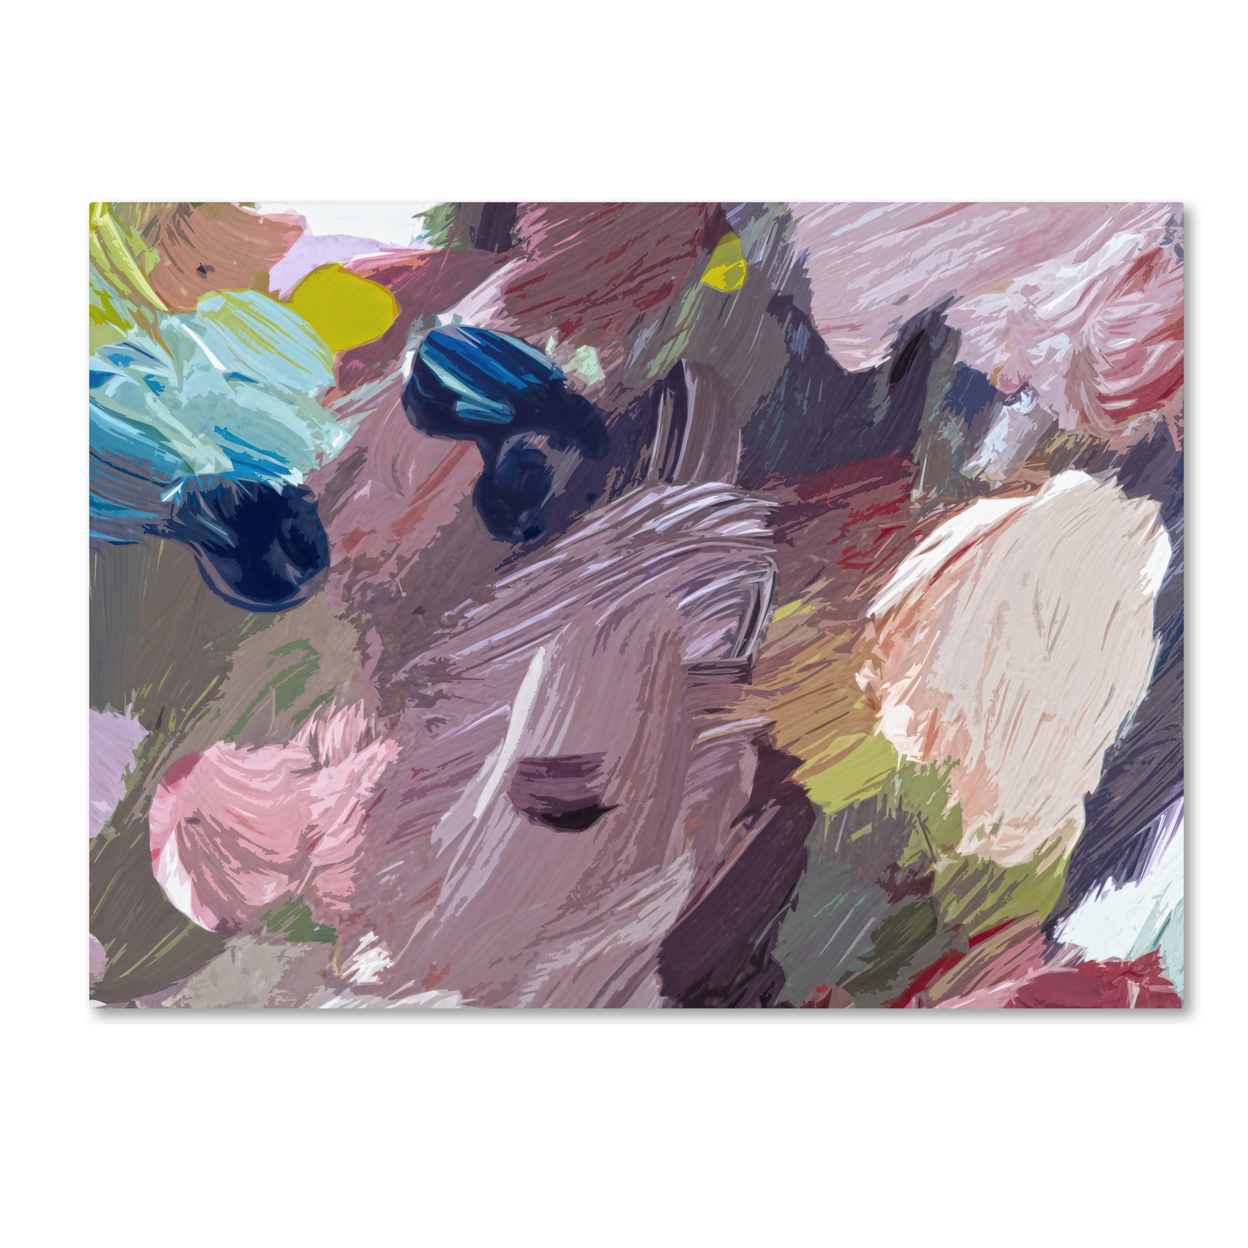 David Lloyd Glover 'Cloud Patterns' Canvas Wall Art 35 X 47 Inches